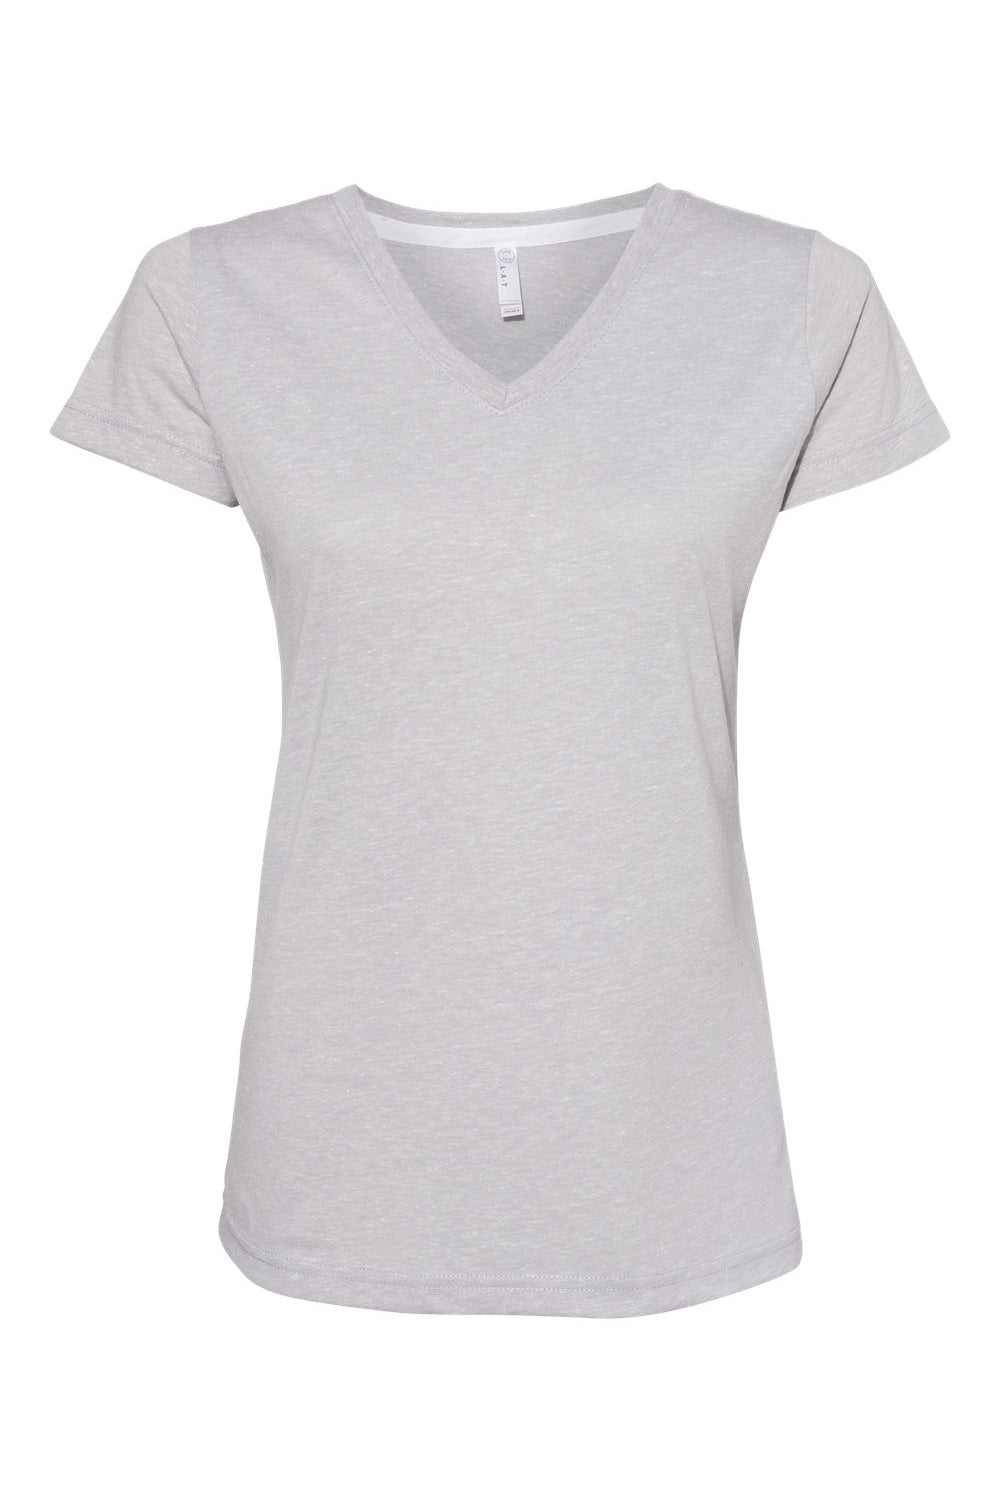 LAT 3591 Womens Harborside Melange Short Sleeve V-Neck T-Shirt Grey Flat Front